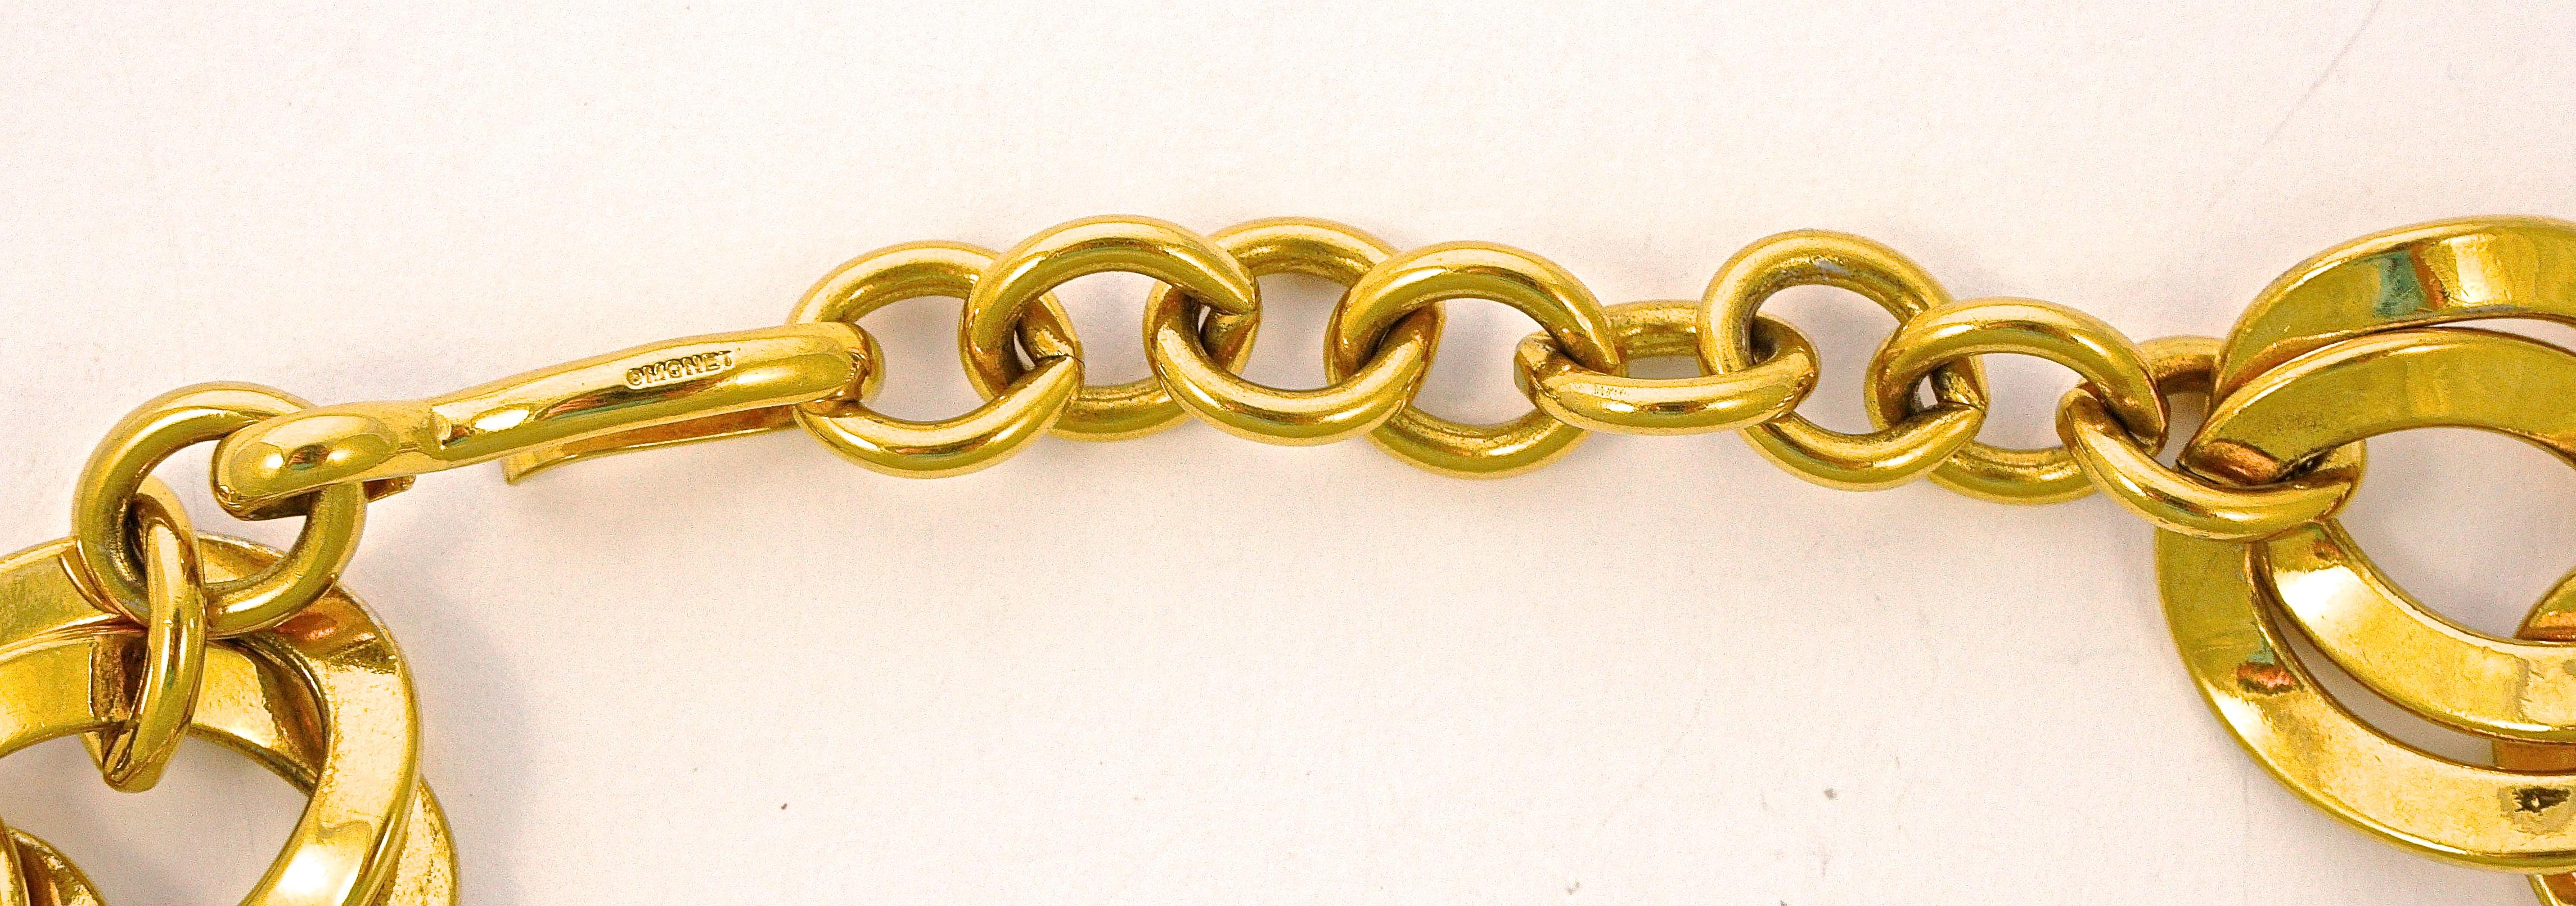 monet gold chain